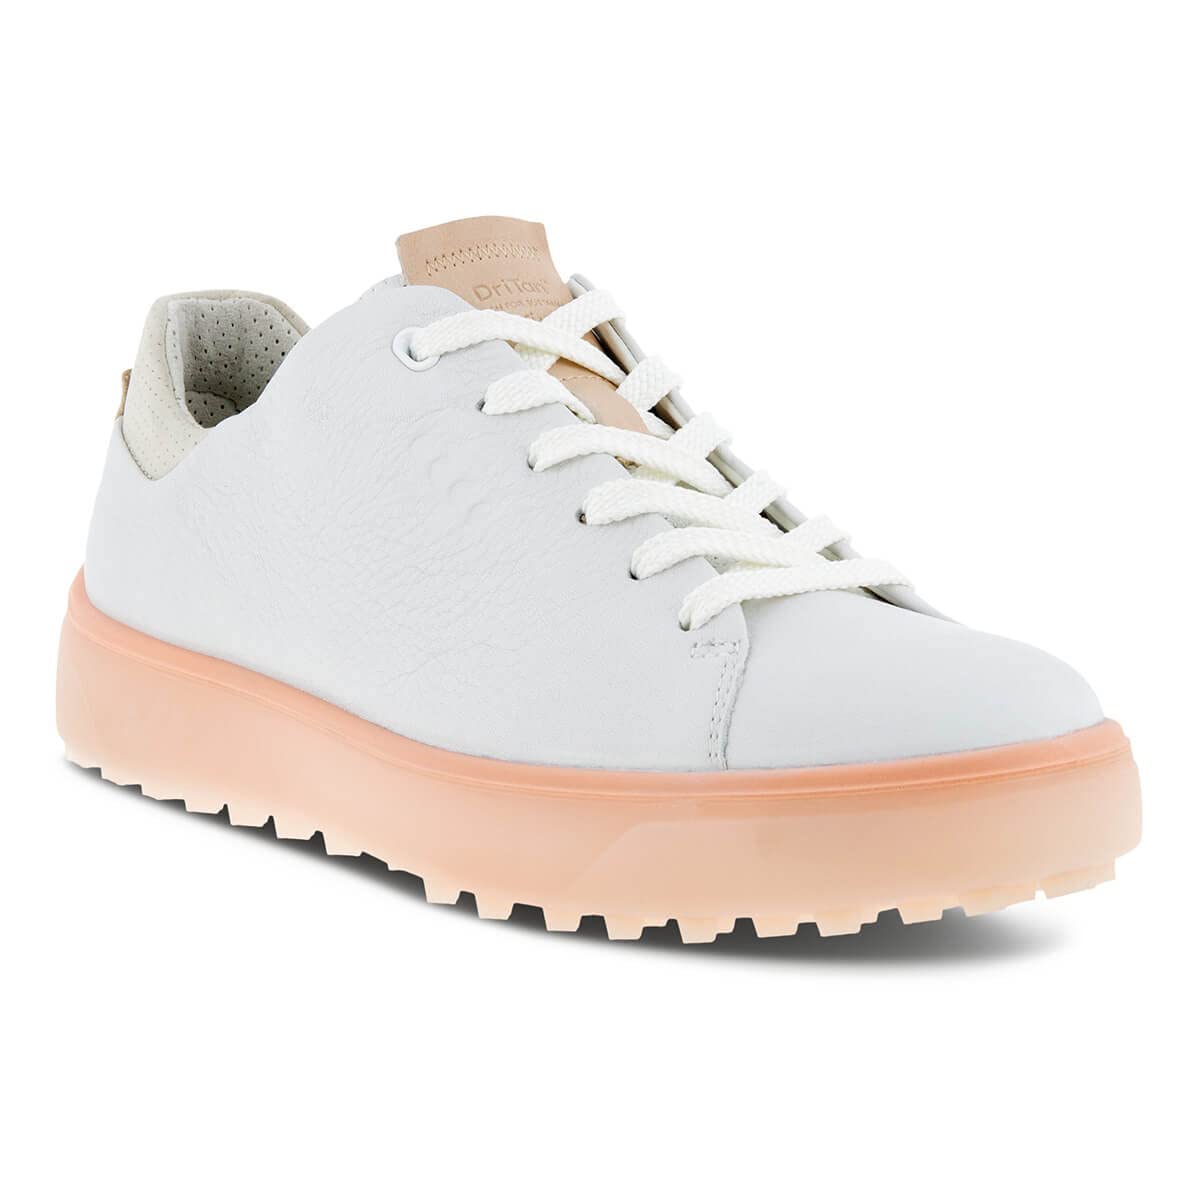 ECCO Women's Tray Hybrid Hydromax Water-Resistant Golf Shoe, Bright White/Peach Nectar, 6-6.5